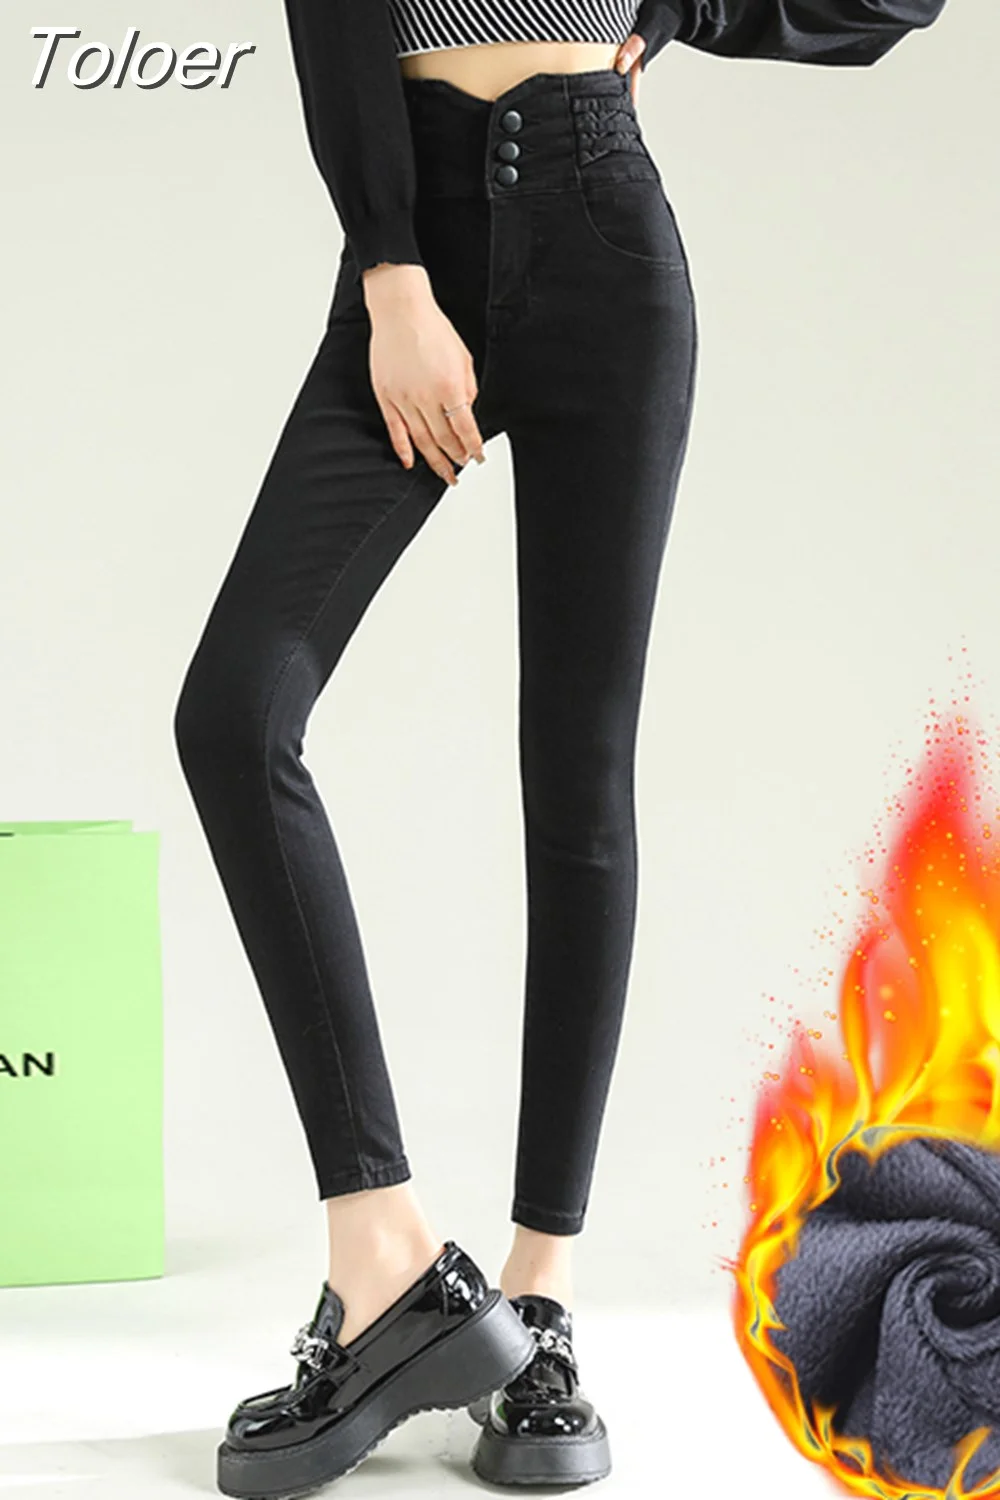 Toloer Fleece Warm New Fashion Wild Versatile Jeans Women's Skinny Y2K Skinny High Quality Black Stretch Pencil Pants Commuter